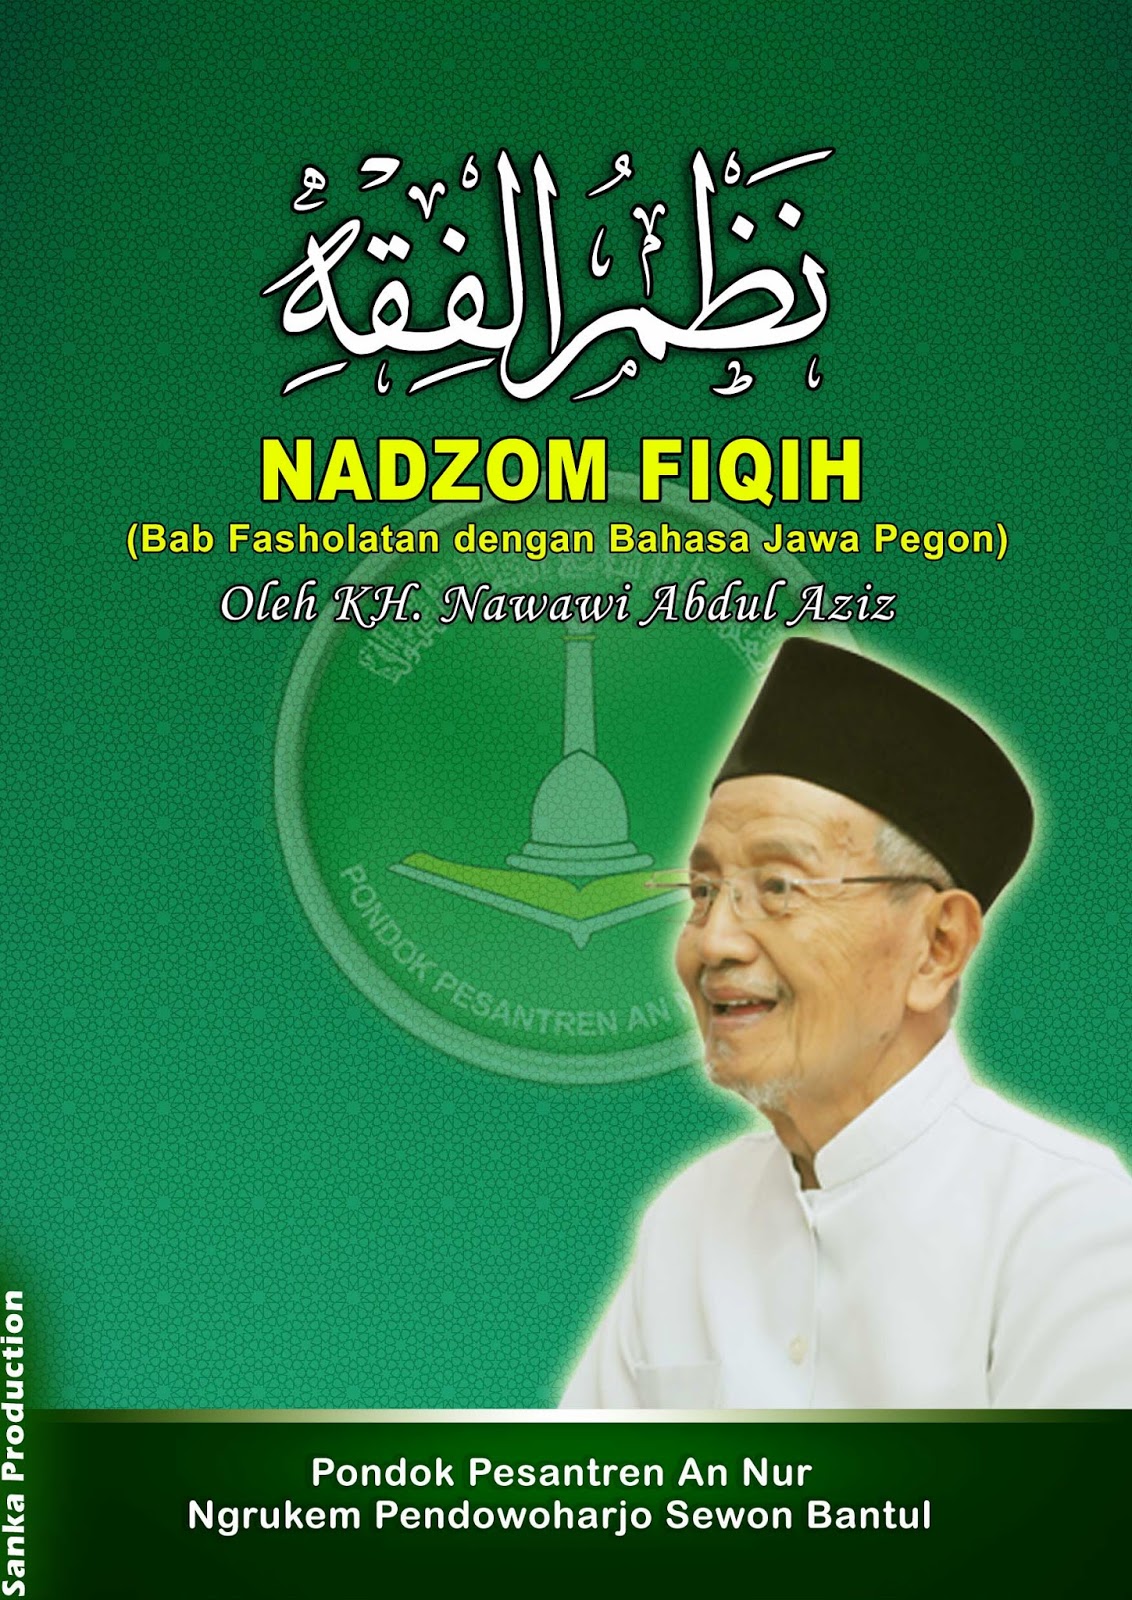 Cover Book Nadzom Fiqih KH. Nawawi Abdul Aziz 